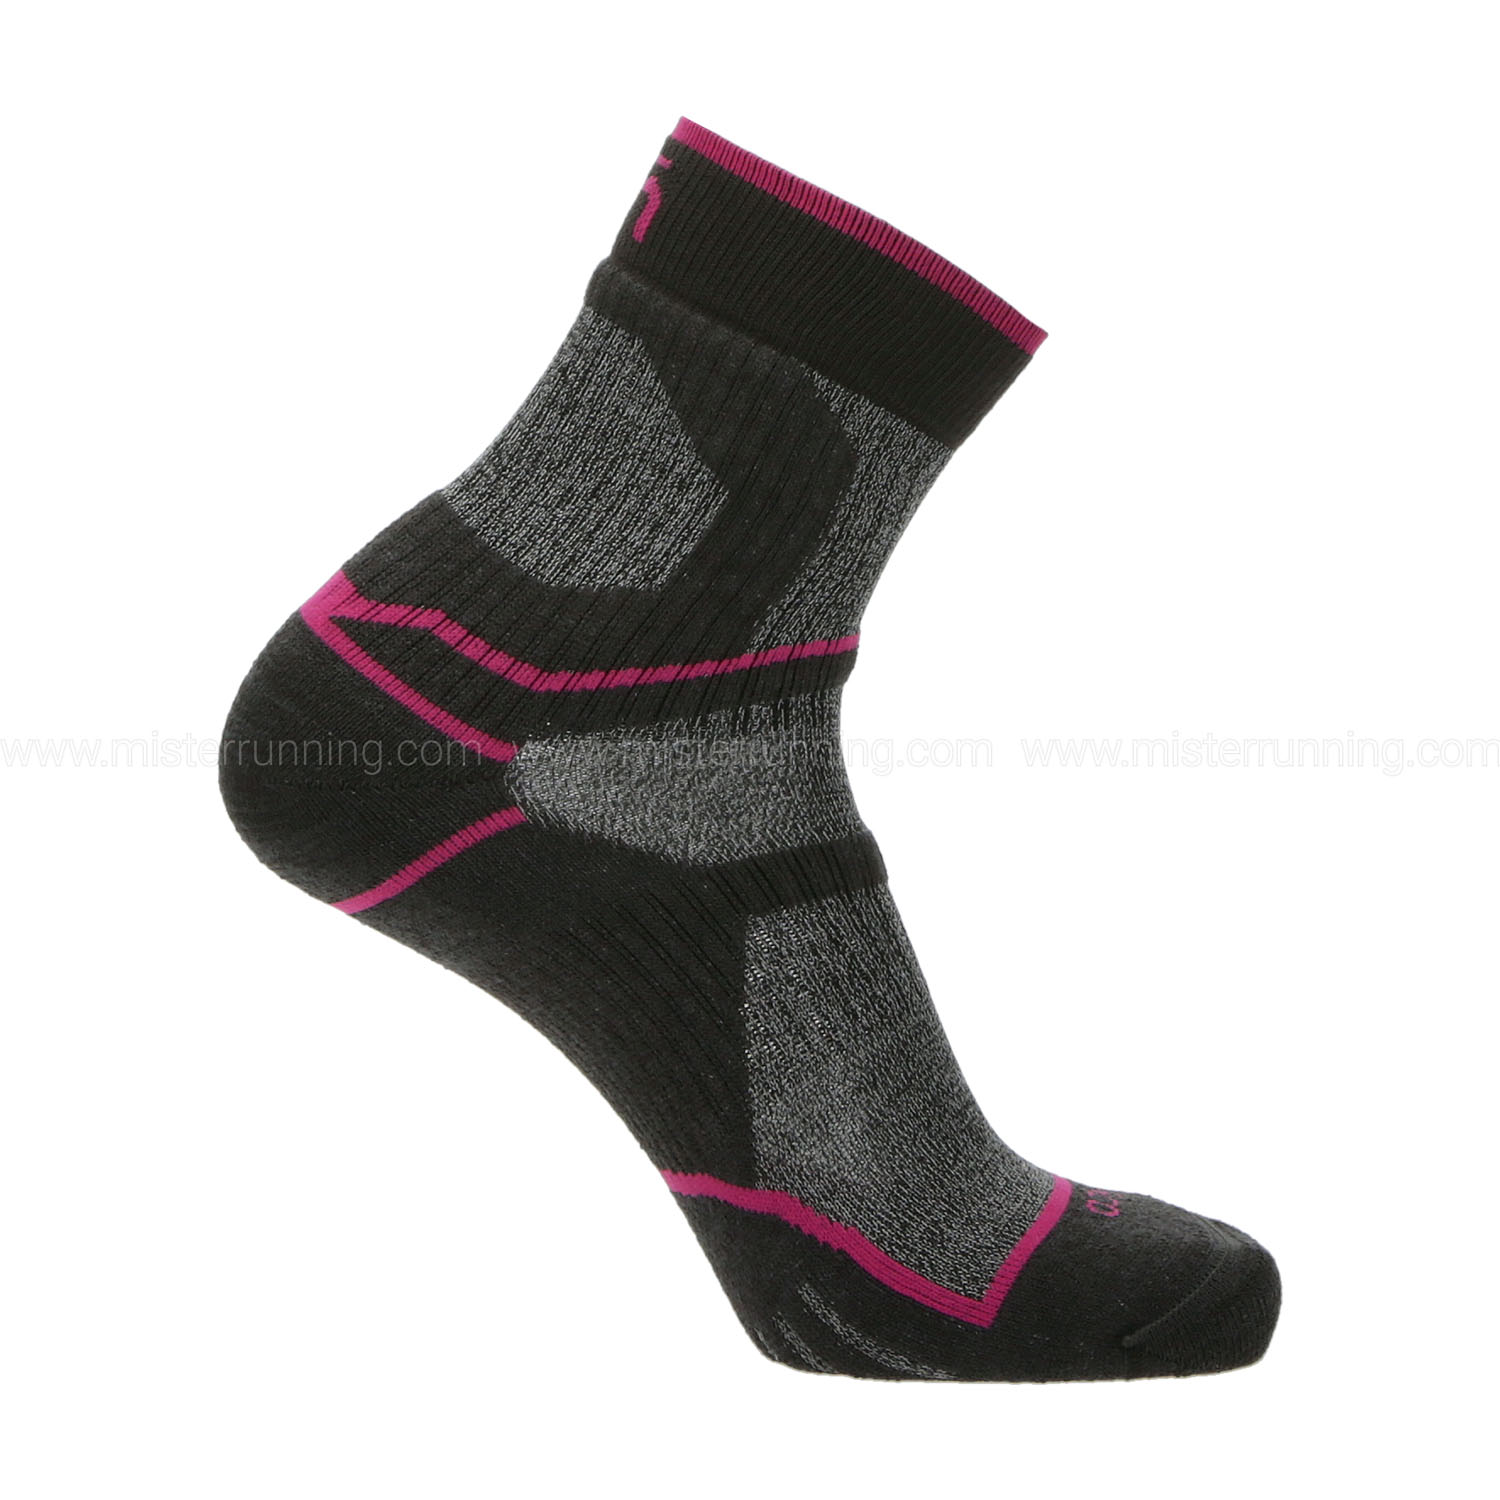 Mico Extra Dry Coolmax Medium Weight Socks - Antracite/Fucsia